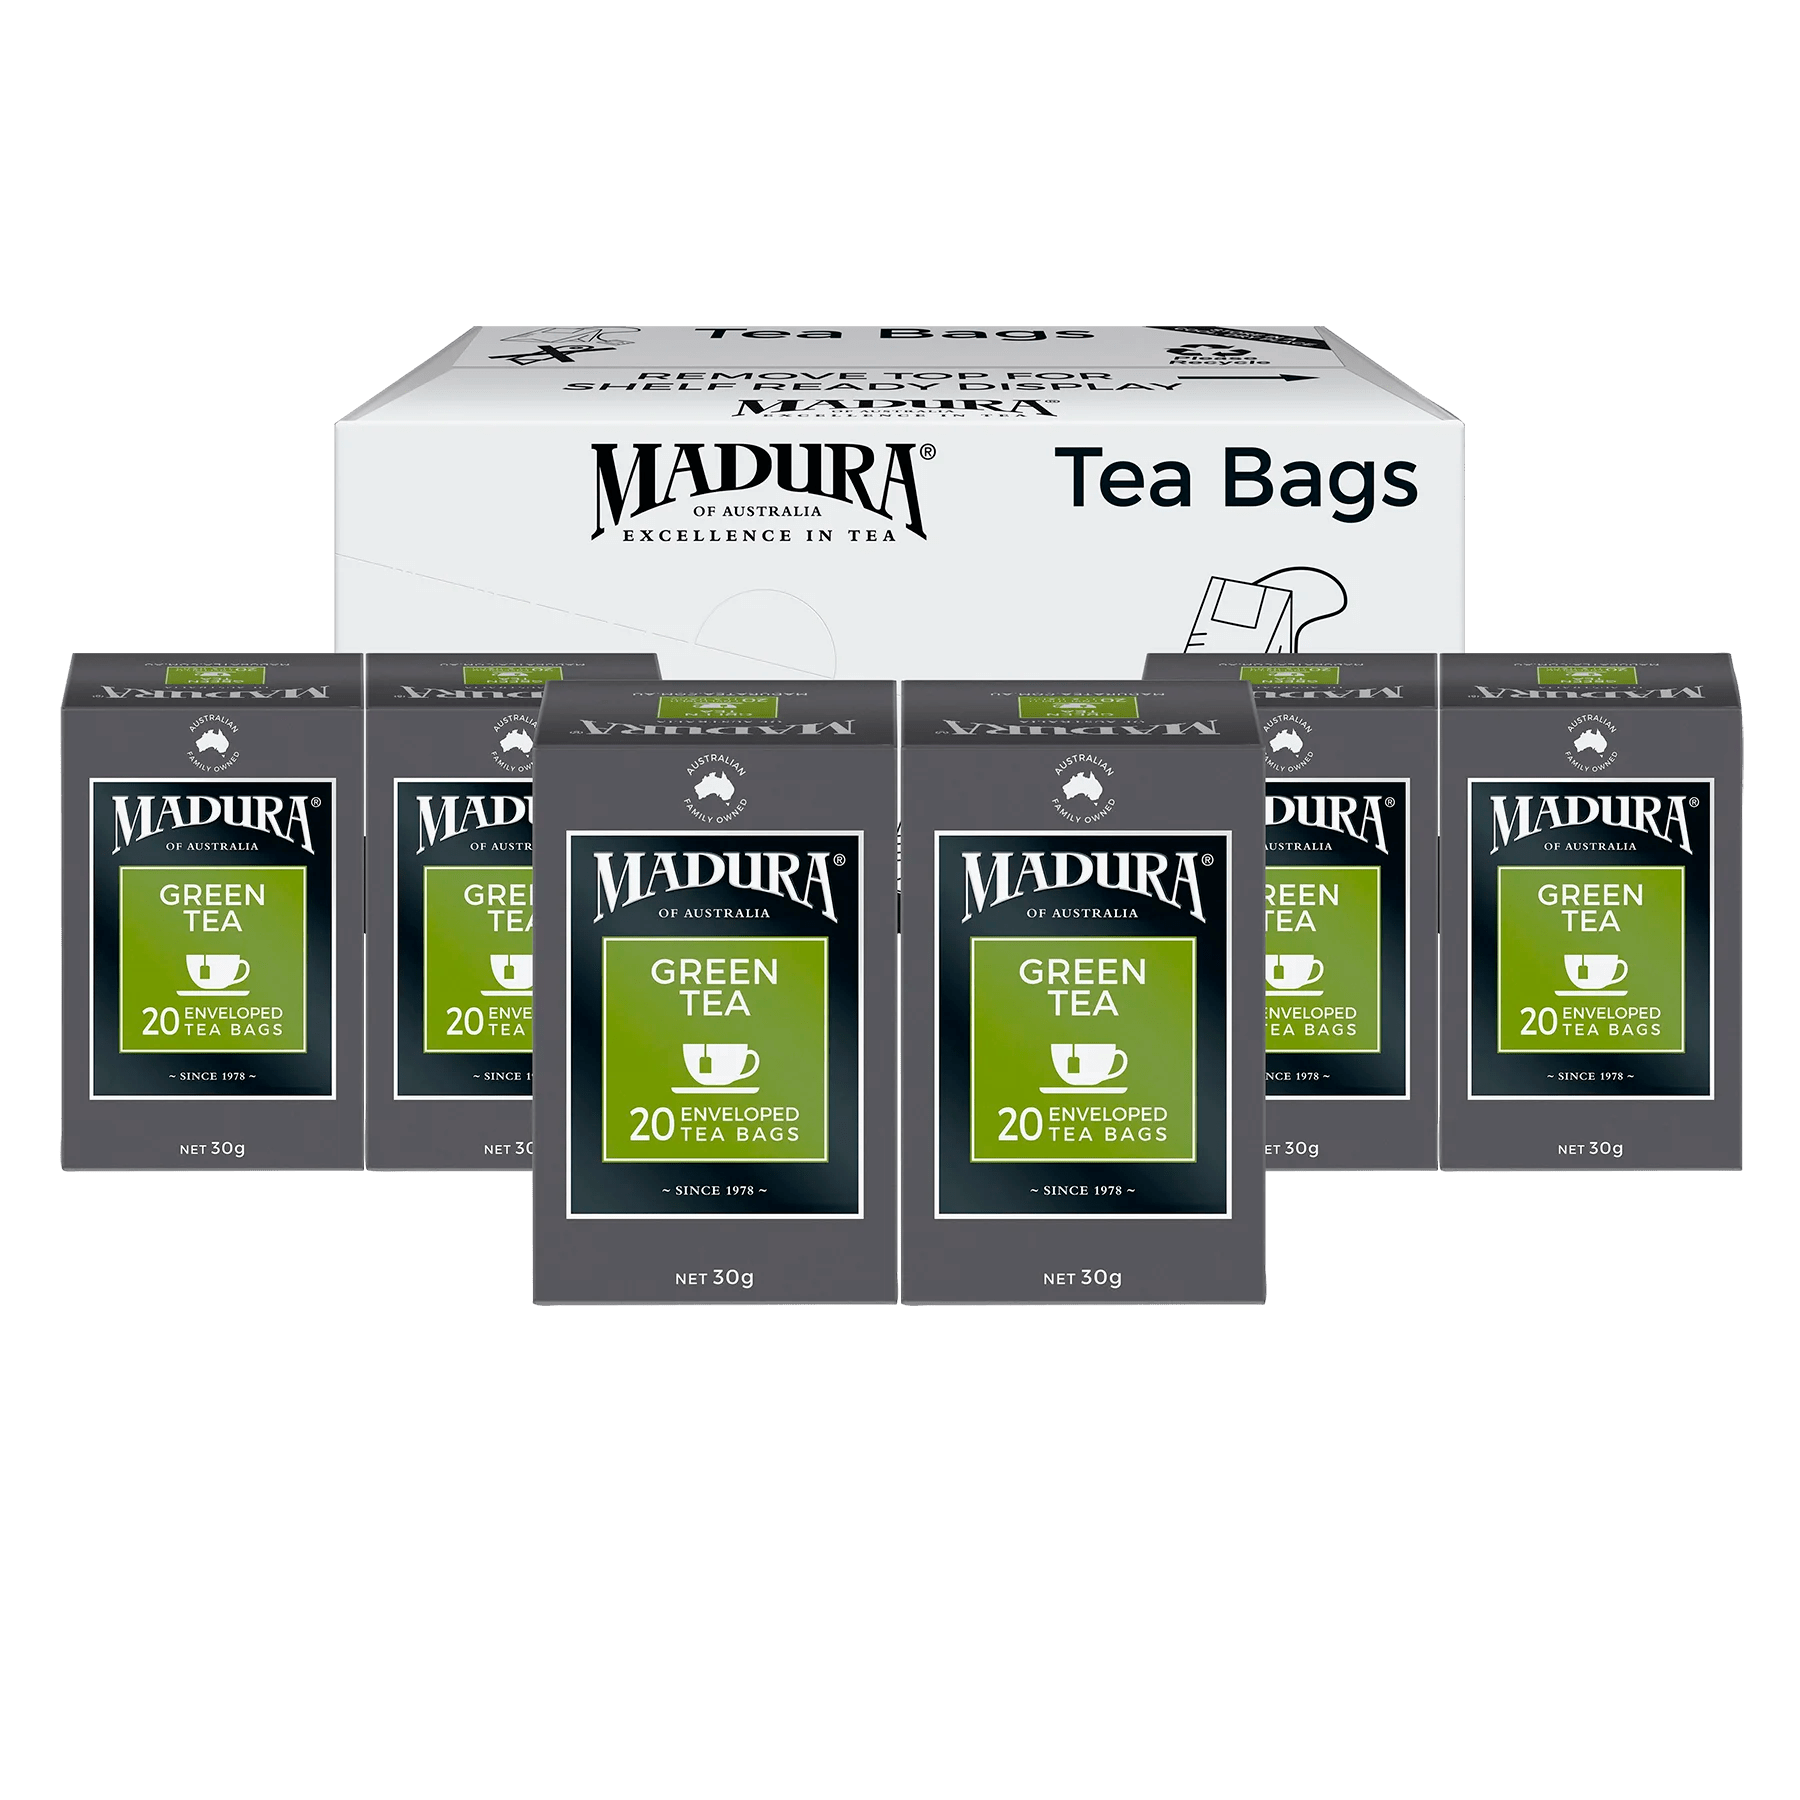 Green Tea 20 Enveloped Tea Bags - Madura Tea